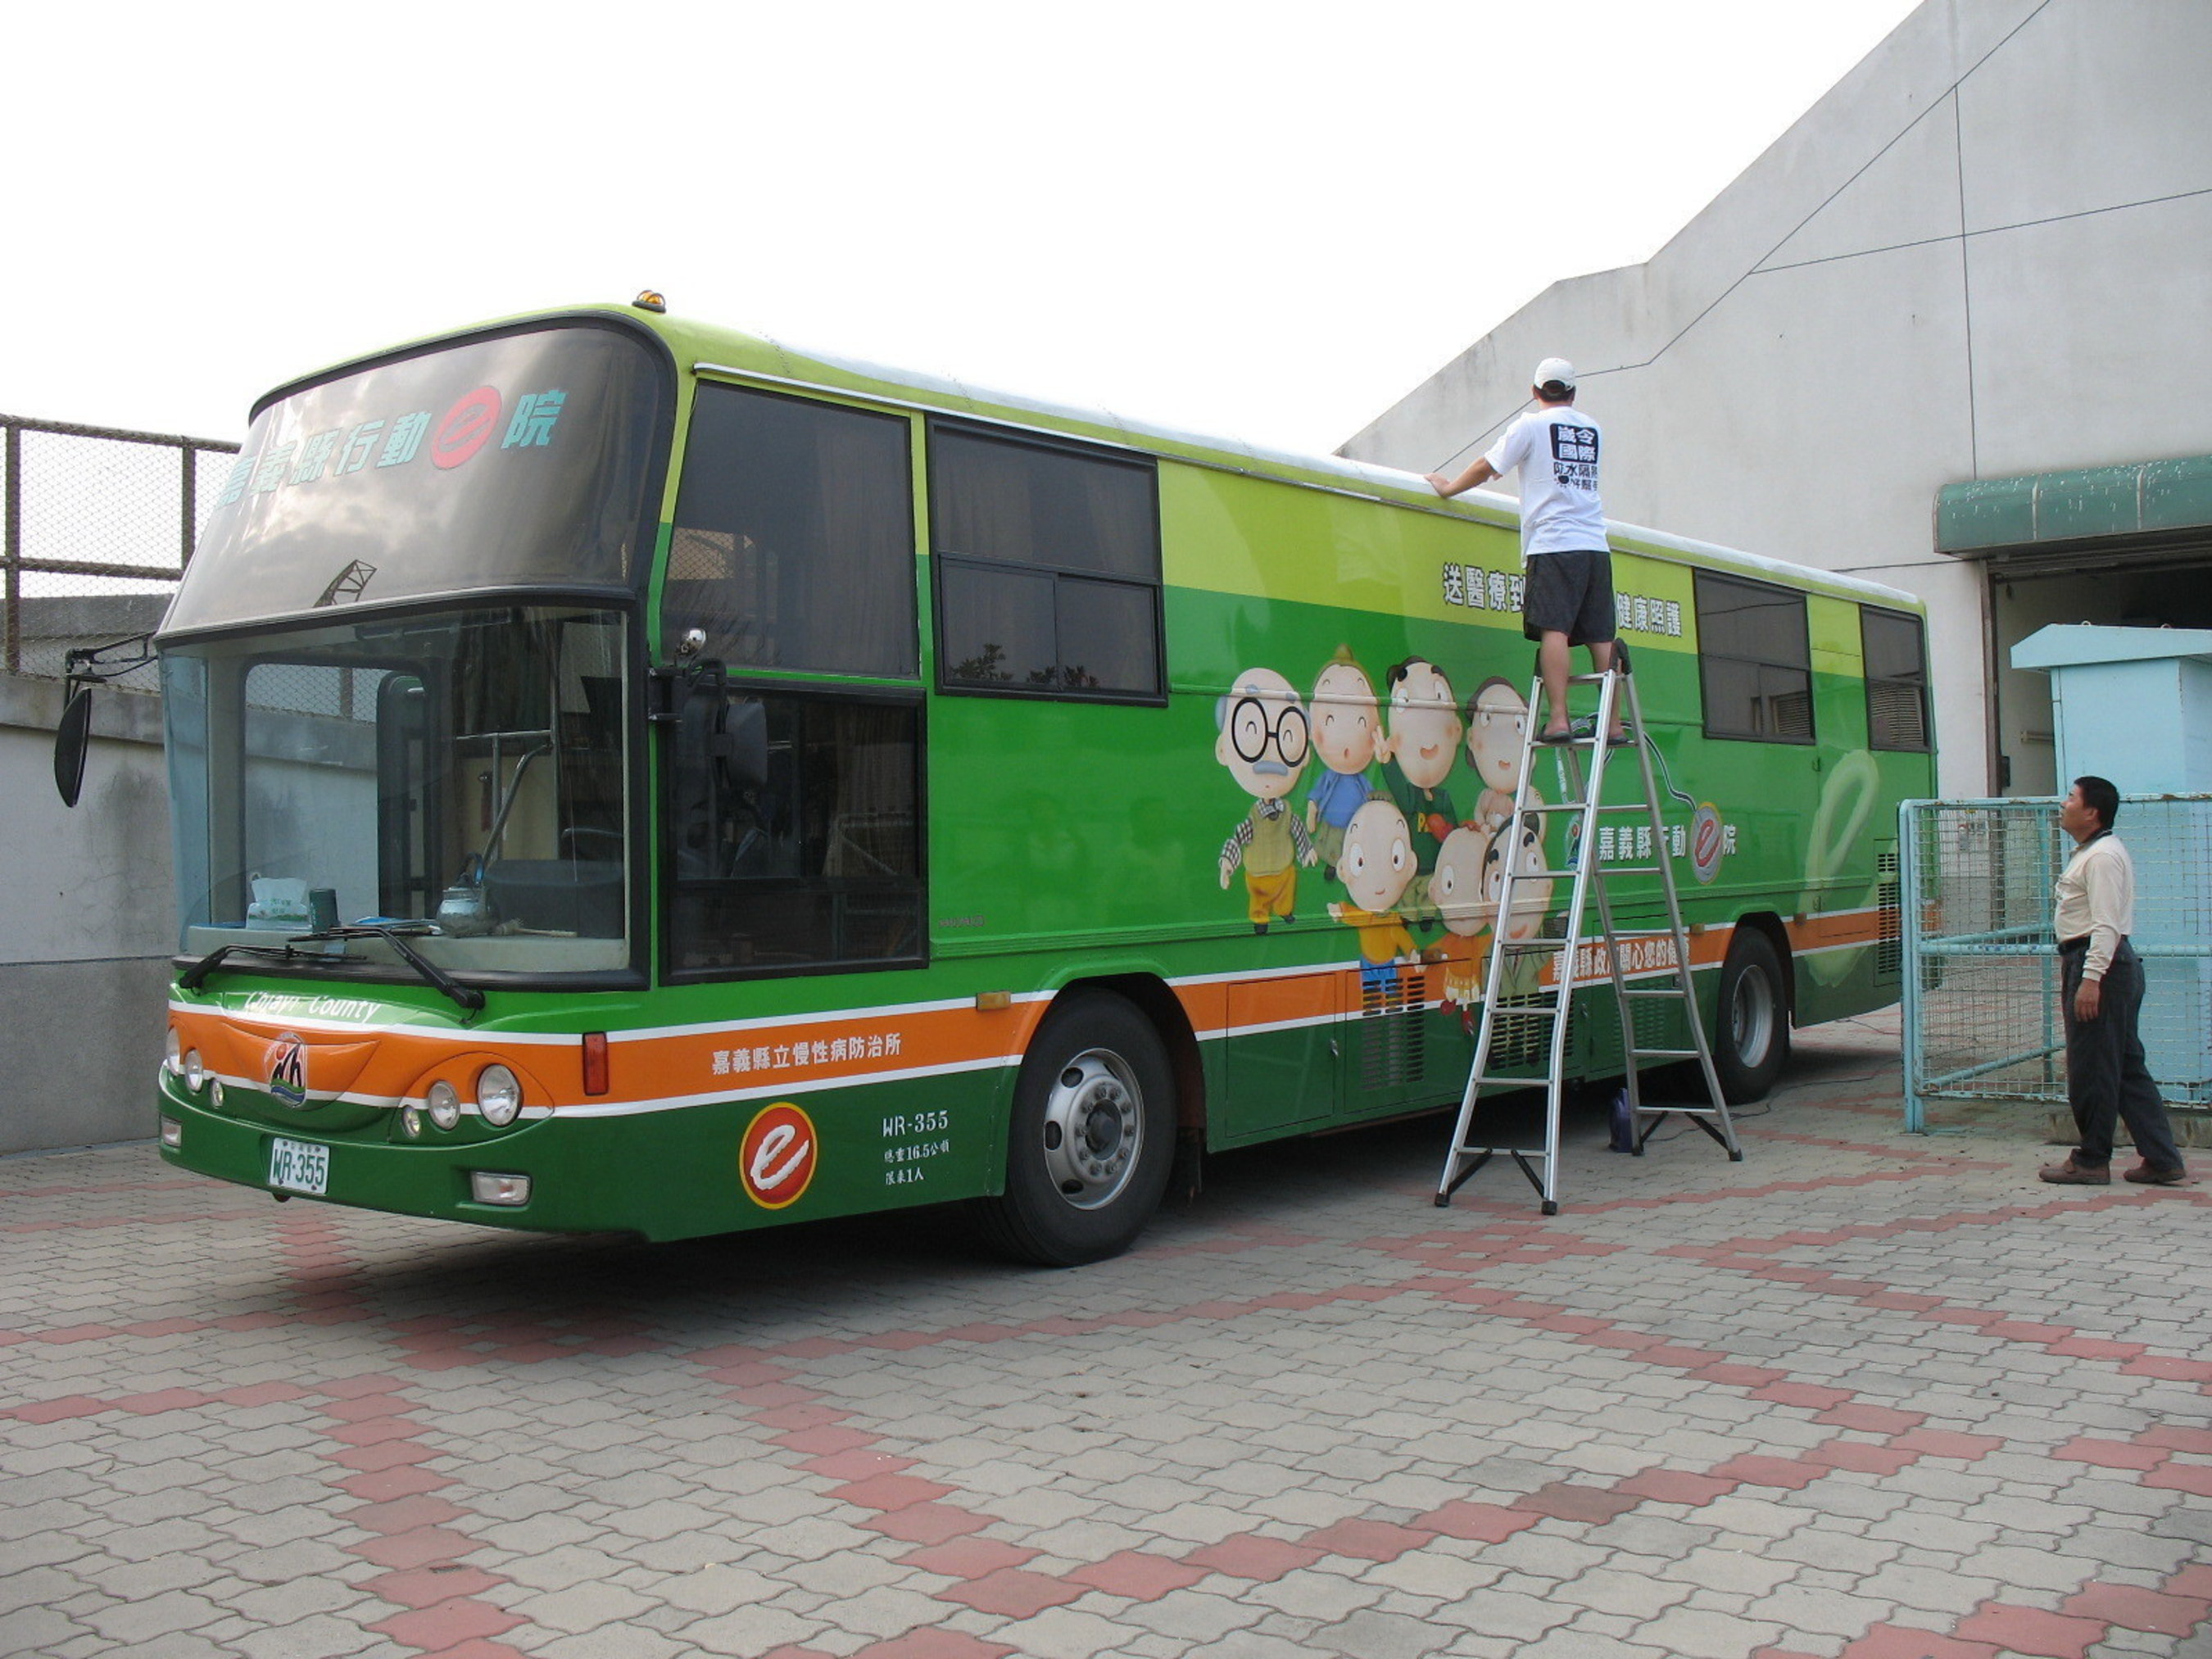 Transportation companies use Heatax to paint the shells of various buses (PRNewsFoto/Heatax)